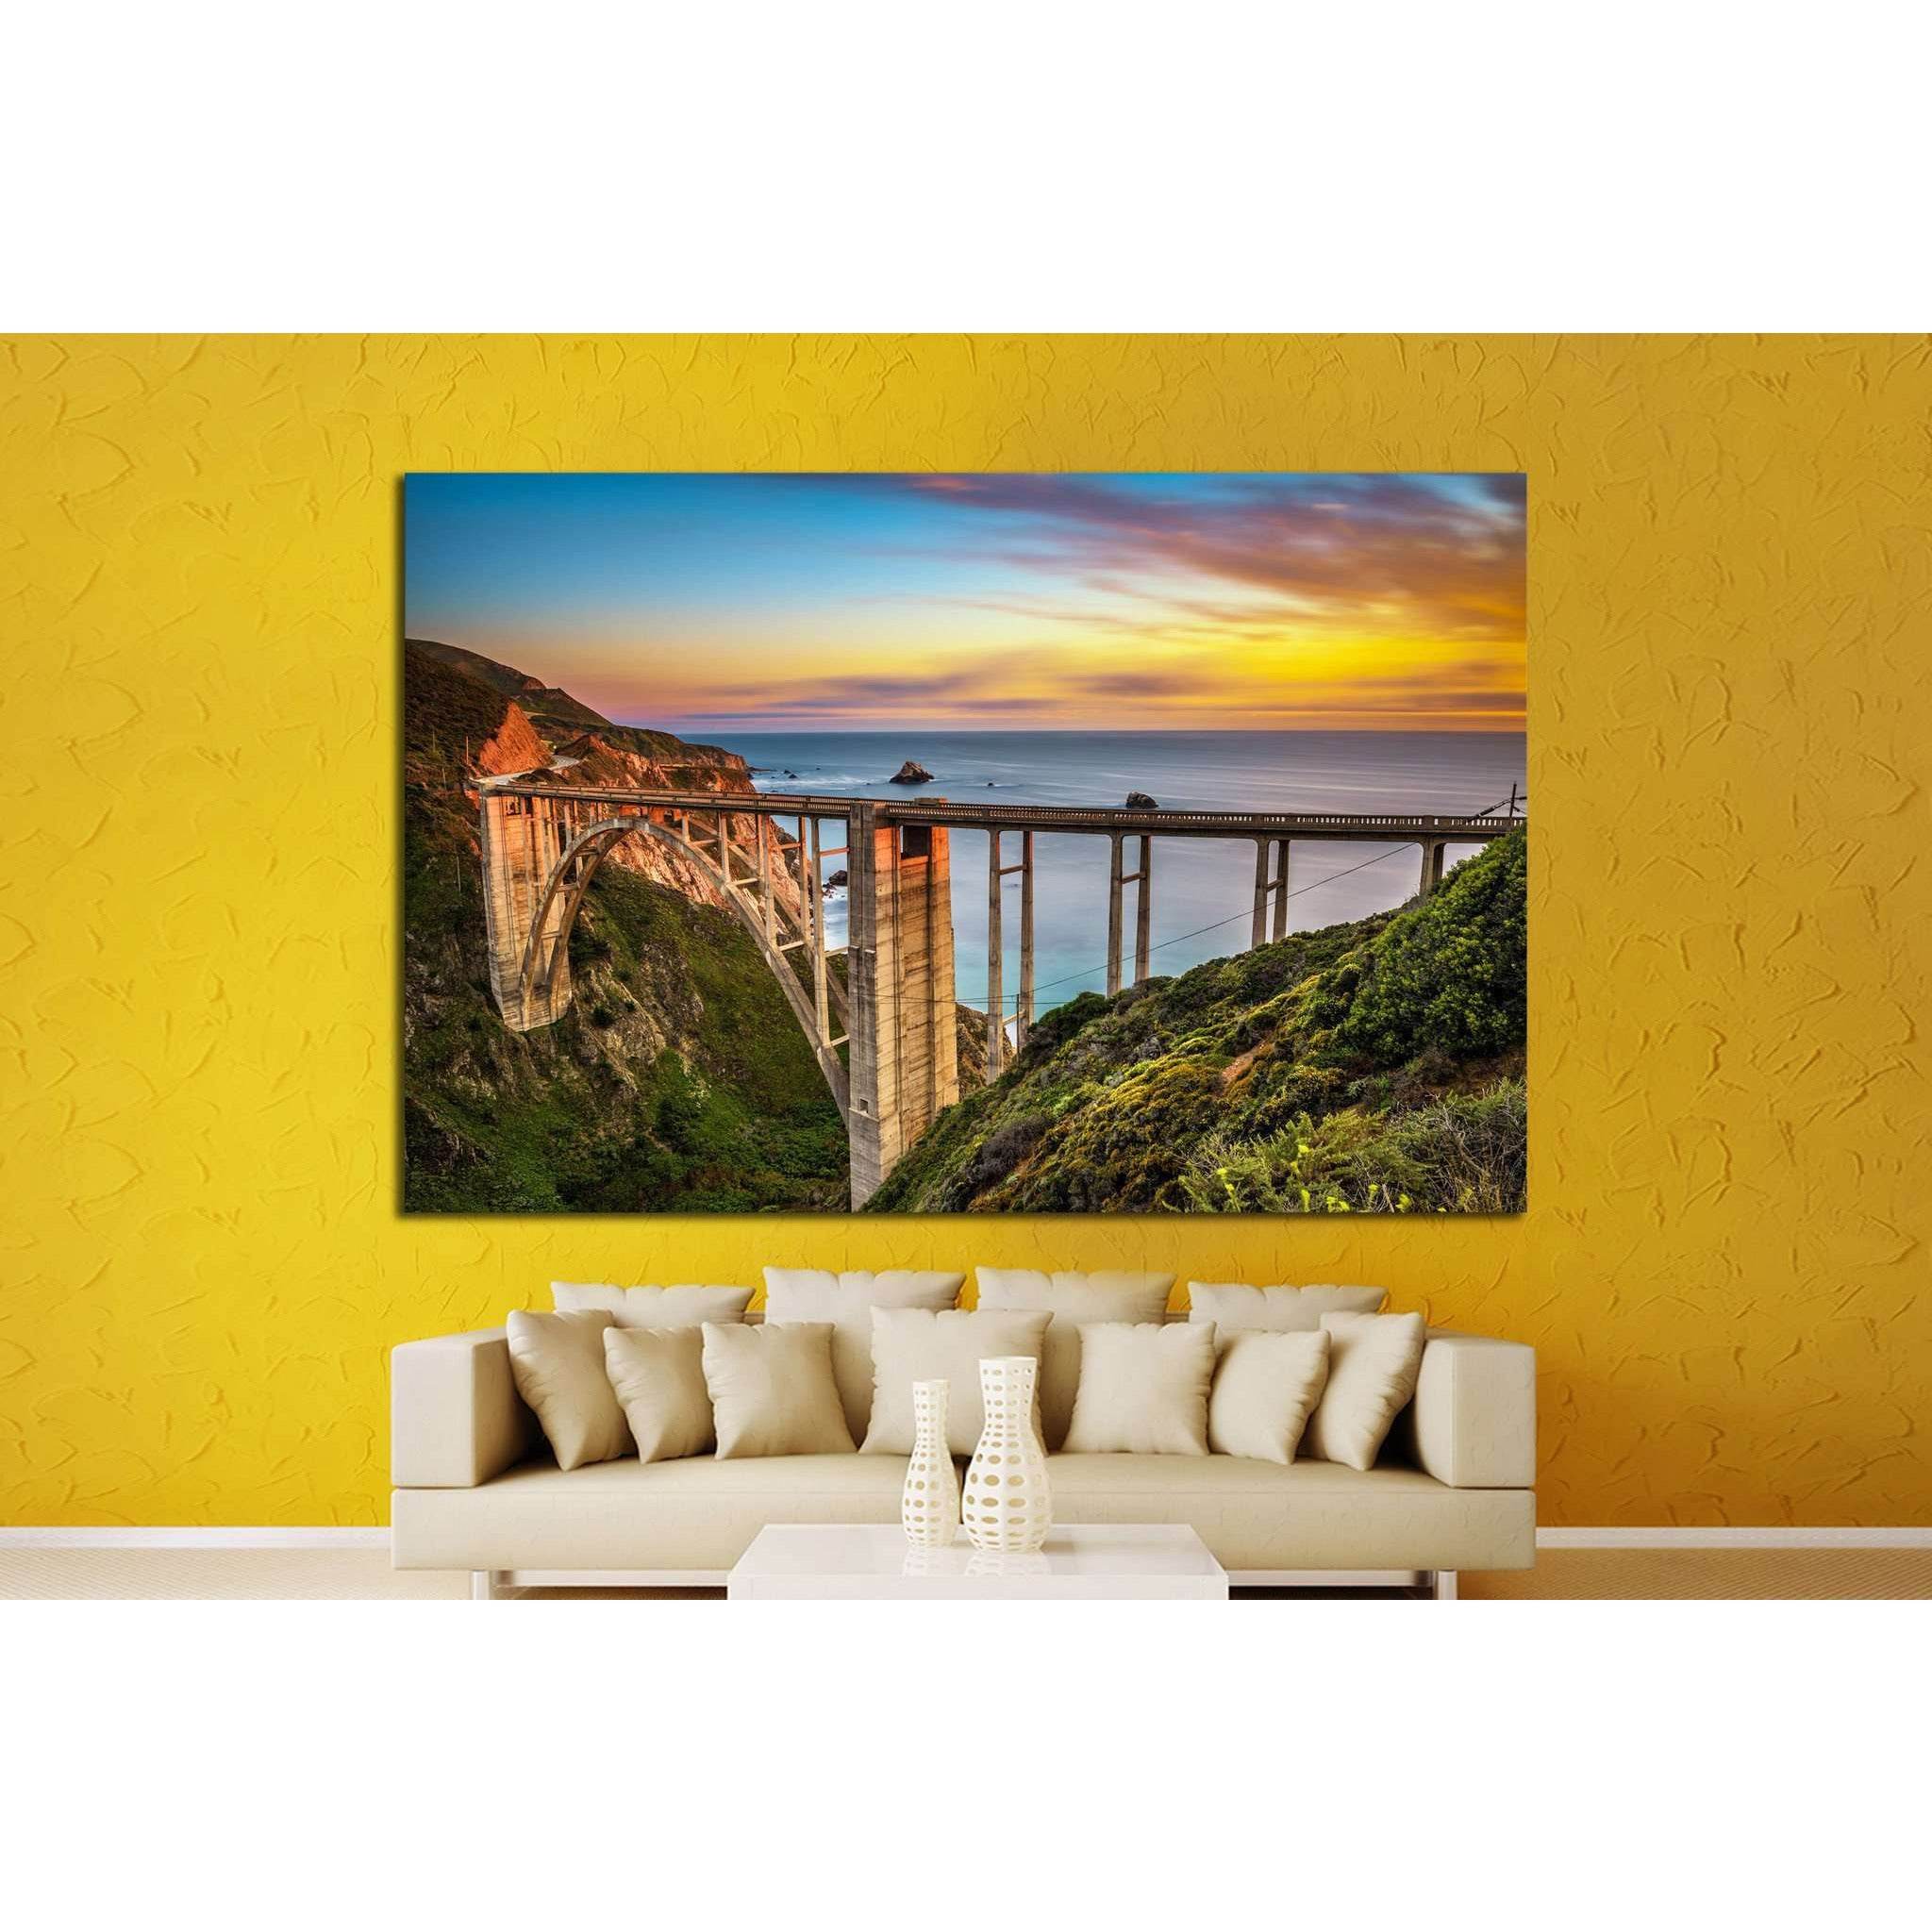 Bixby Bridge (Rocky Creek Bridge) California, USA №1301 Ready to Hang Canvas Print